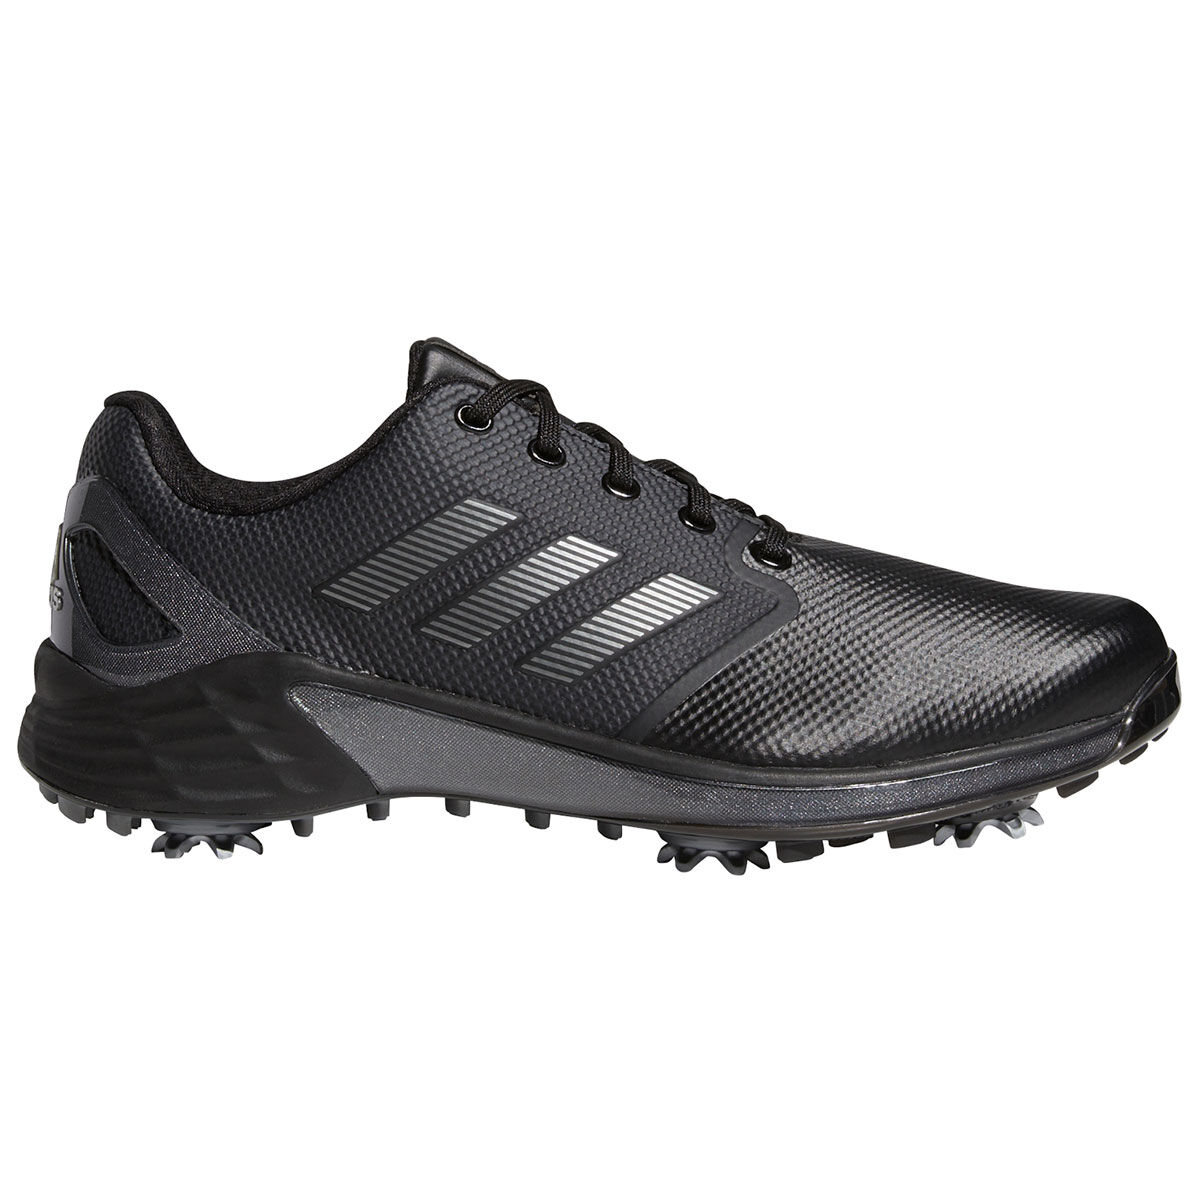 Chaussures adidas Golf ZG21, homme, 8, Noir/Argent/Gris | Online Golf